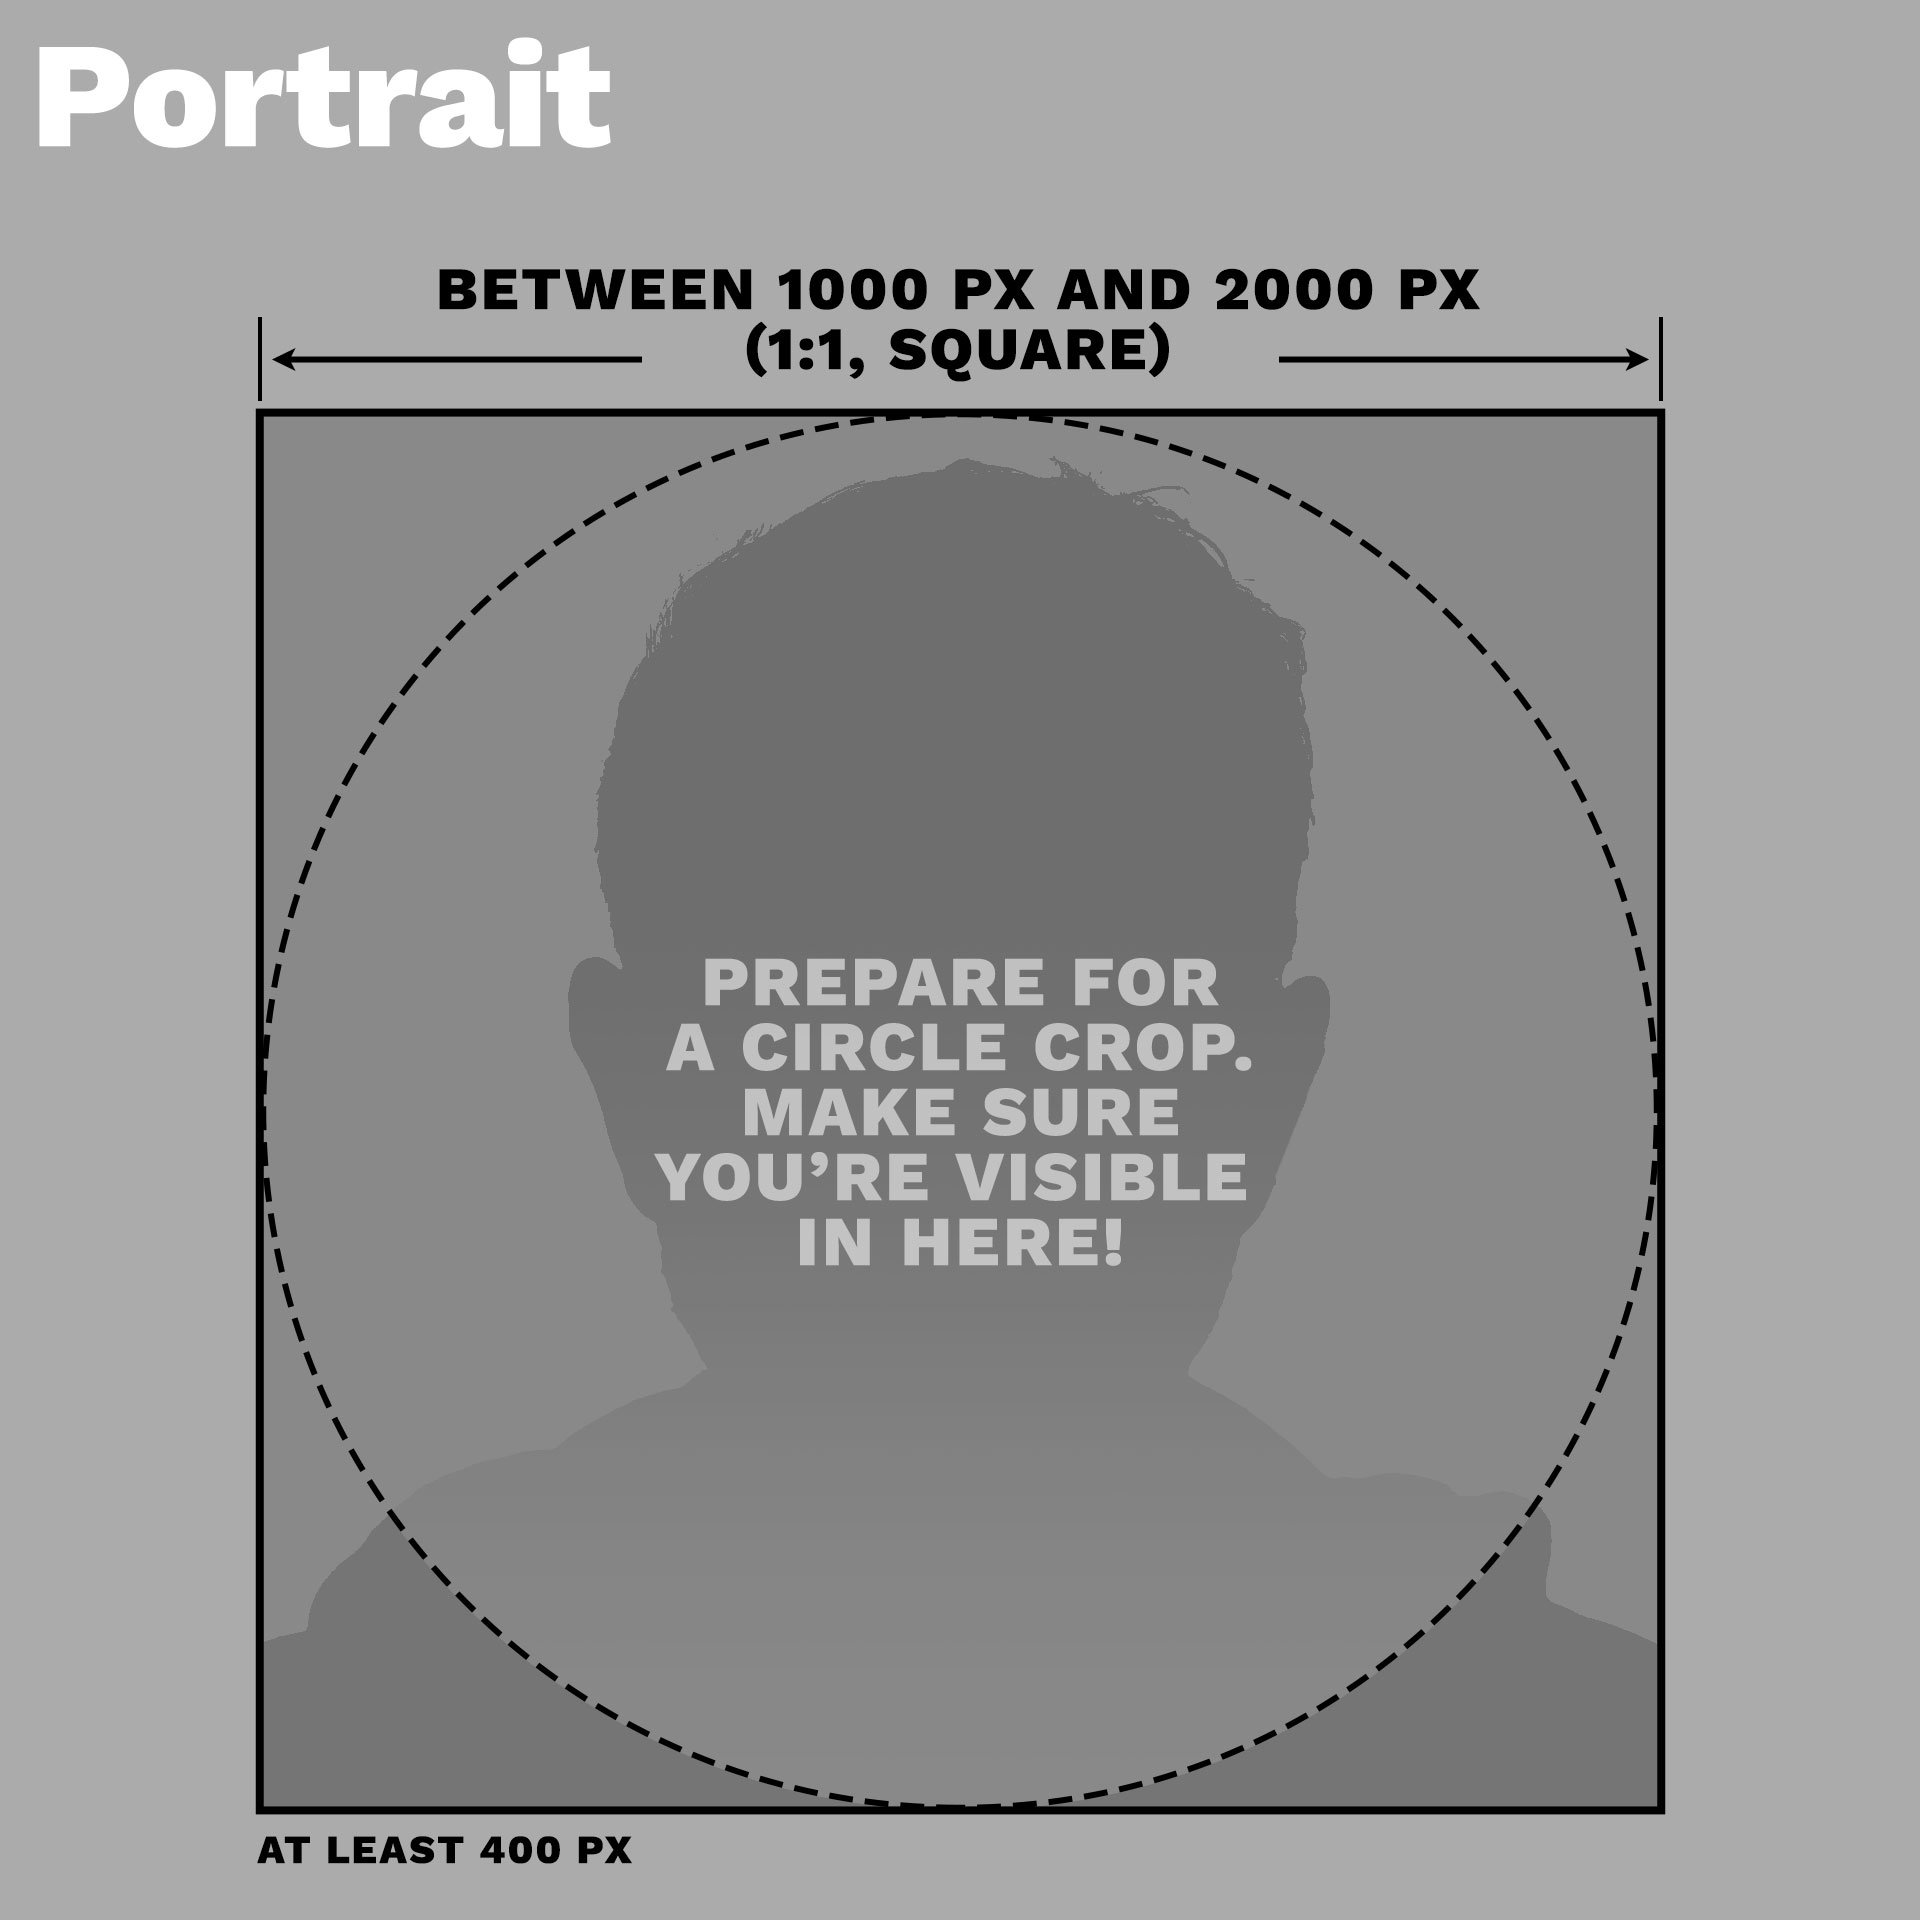 Crop your portrait square between 1000 and 2000 pixels